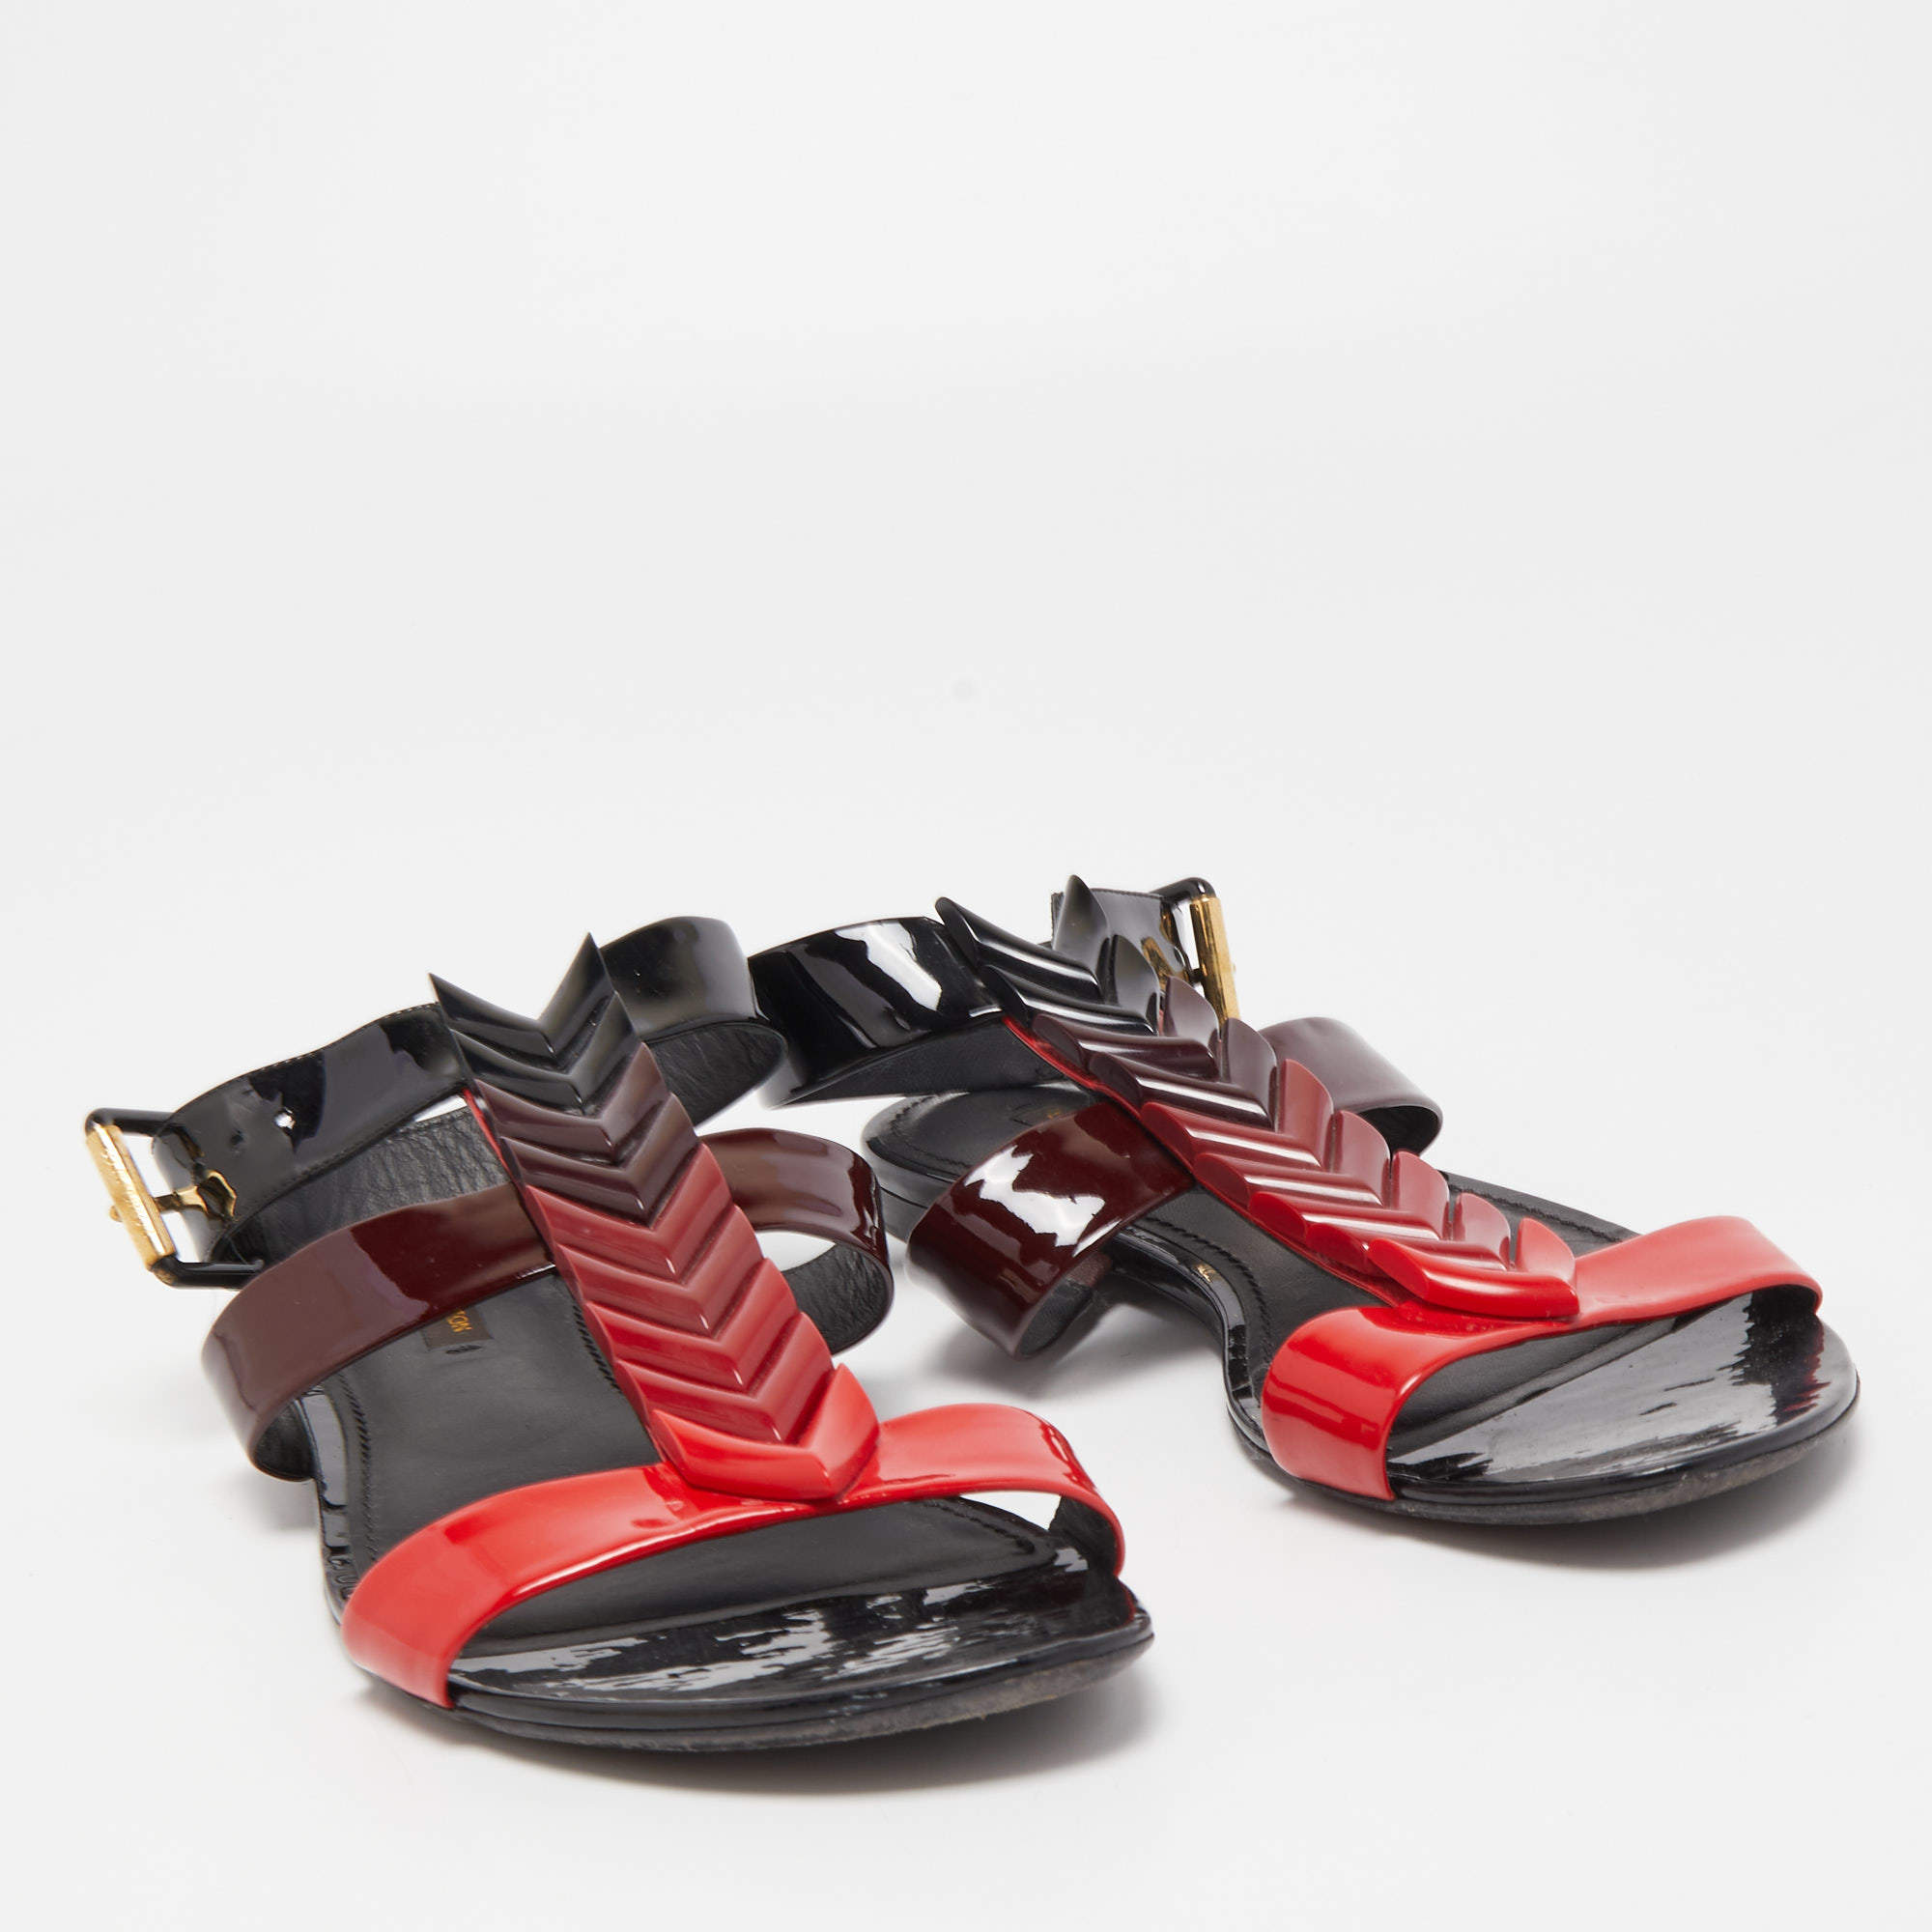 Louis Vuitton Tricolor Patent Leather Ankle Cuff Flat Sandals Size 39